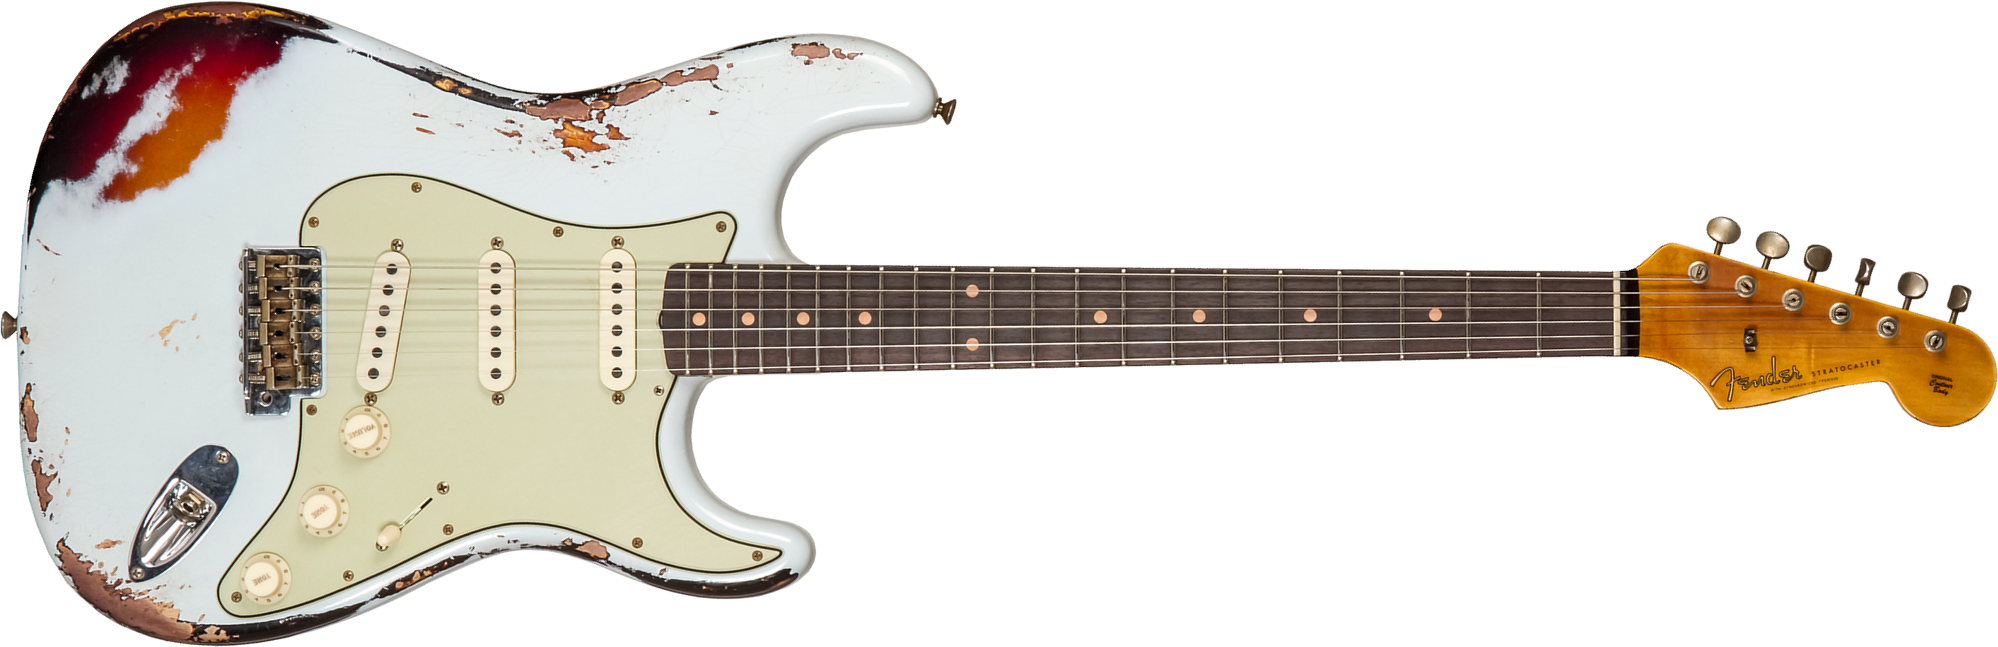 Fender Custom Shop Strat 1961 3s Trem Rw #cz573714 - Heavy Relic Aged Sonic Blue O. 3-color Sunburst - Str shape electric guitar - Main picture